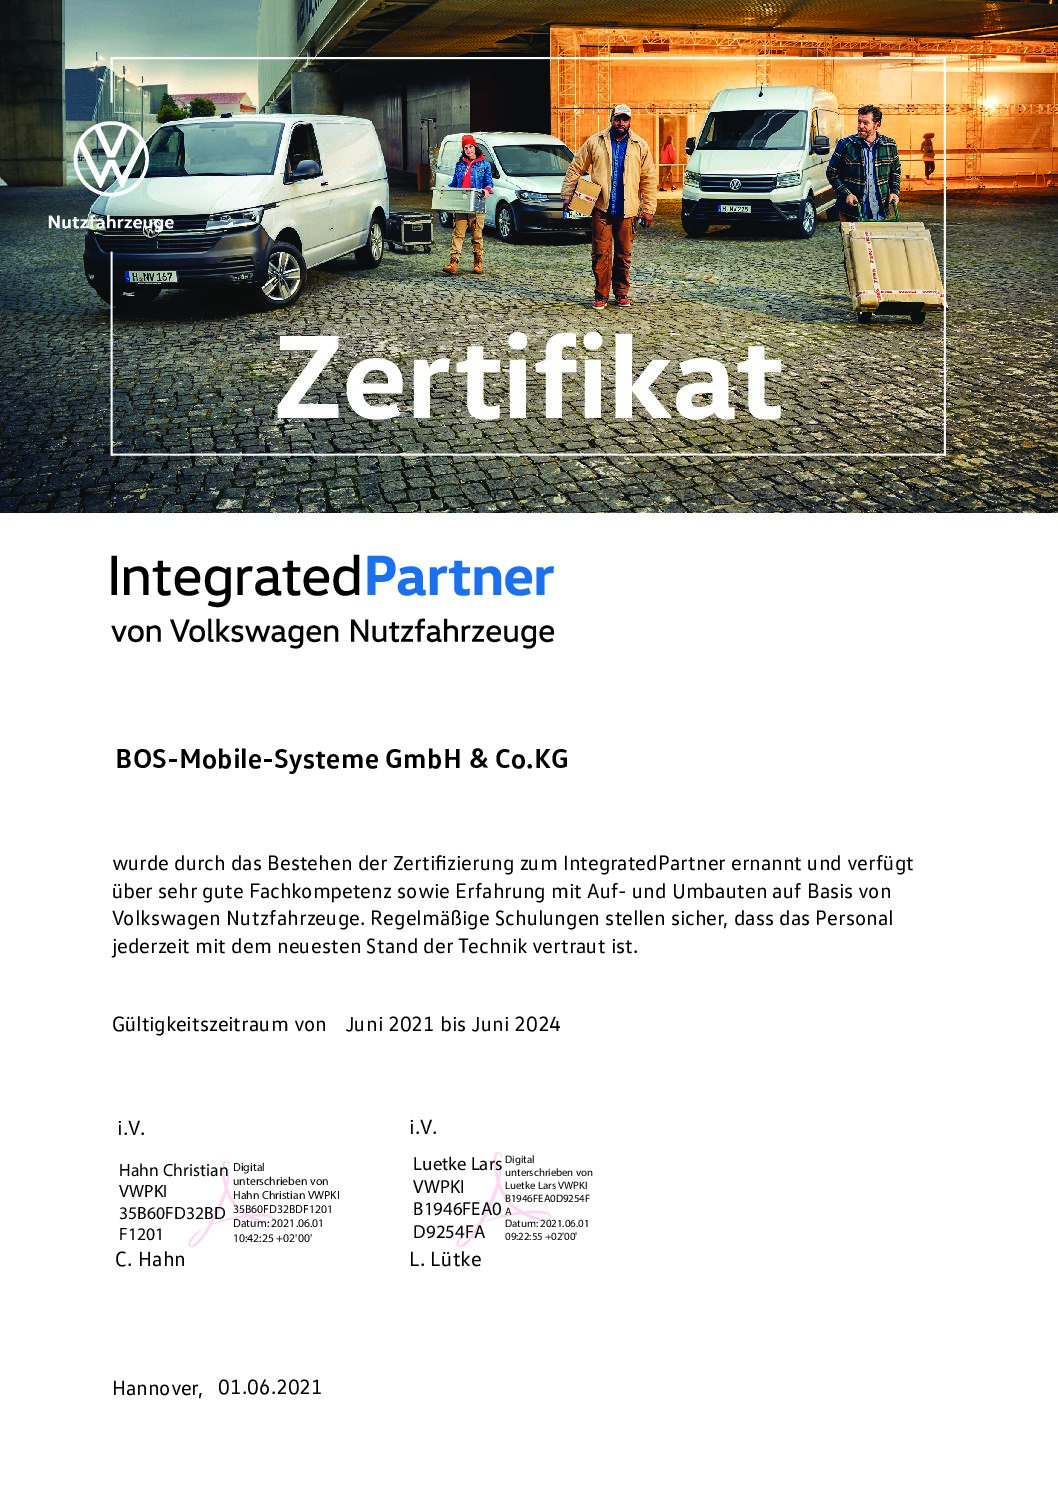 Zertifikat VW Integrated Partner